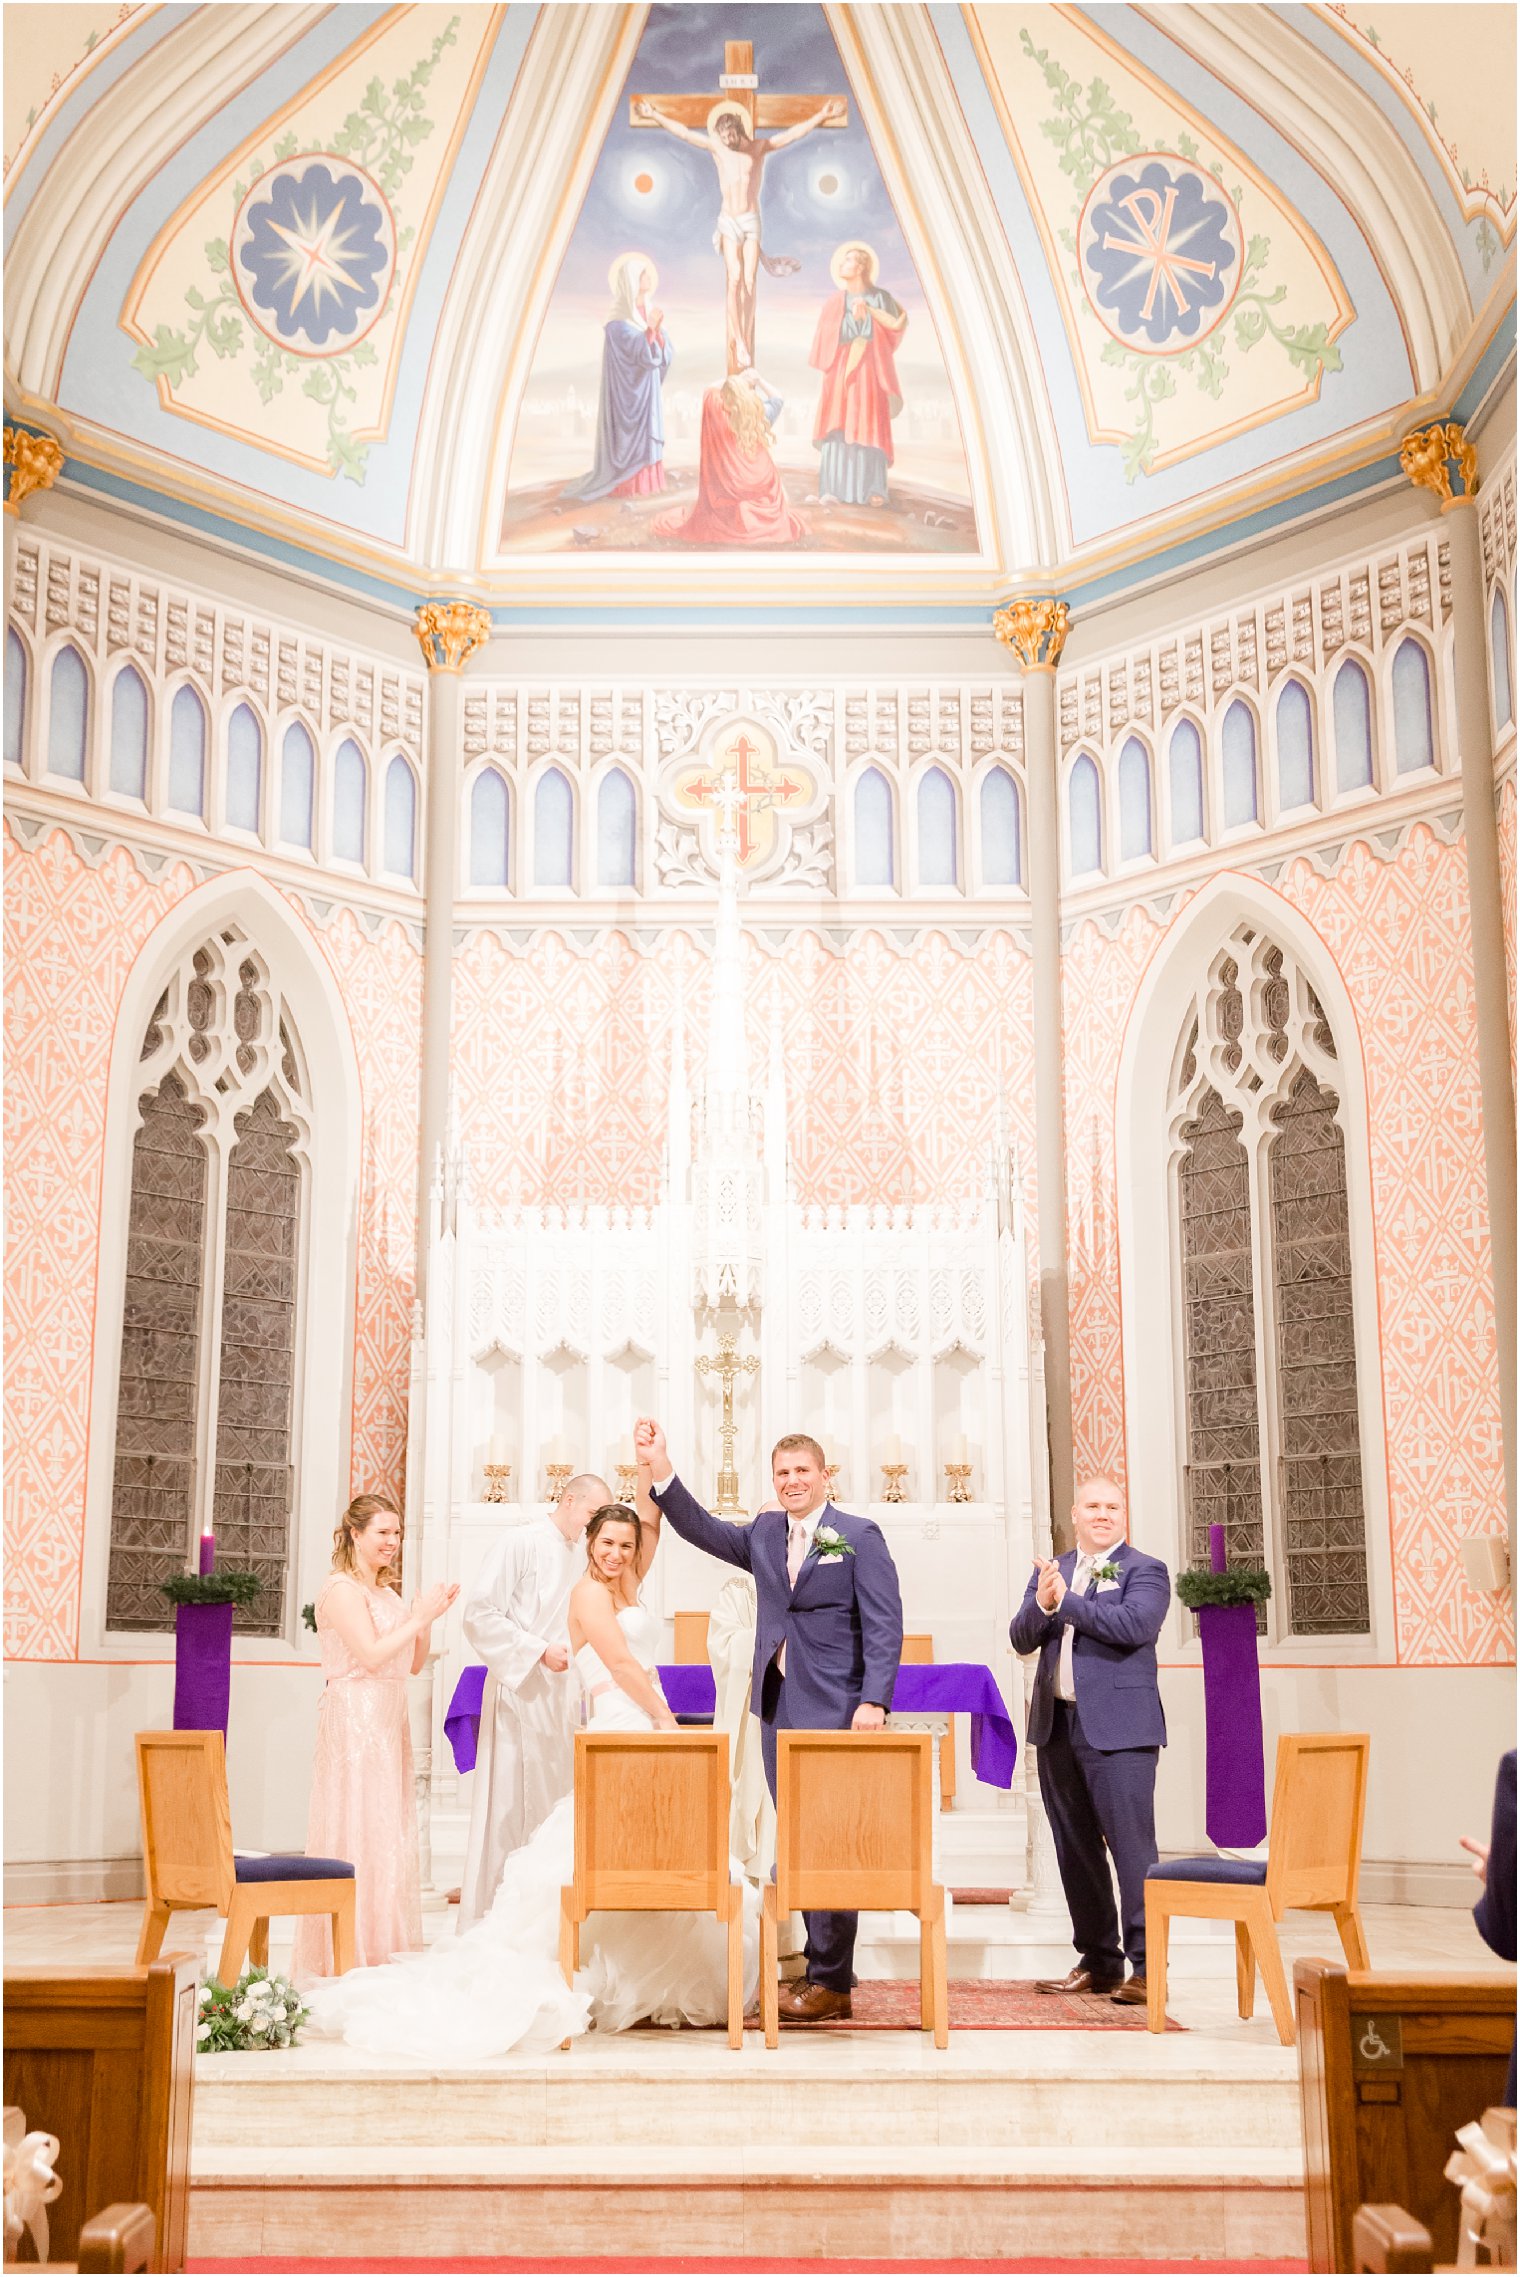 Catholic wedding ceremony at St. Peter the Apostle in New Brunswick, NJ